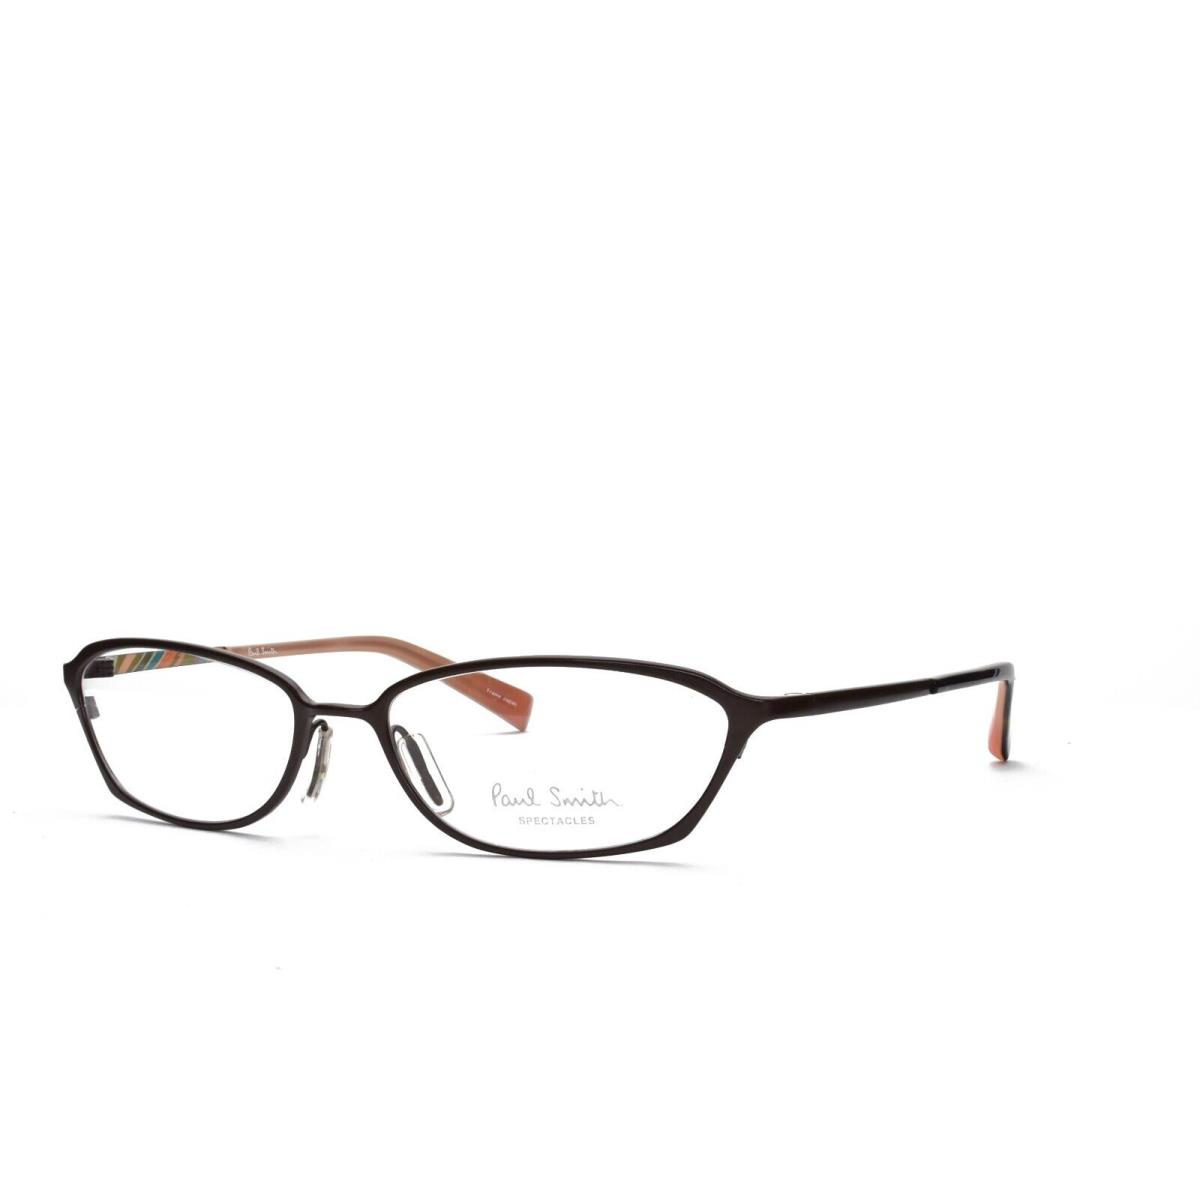 Paul Smith 192 Cho 53-16-130 Brown Vtg Vintage Eyeglasses Frames